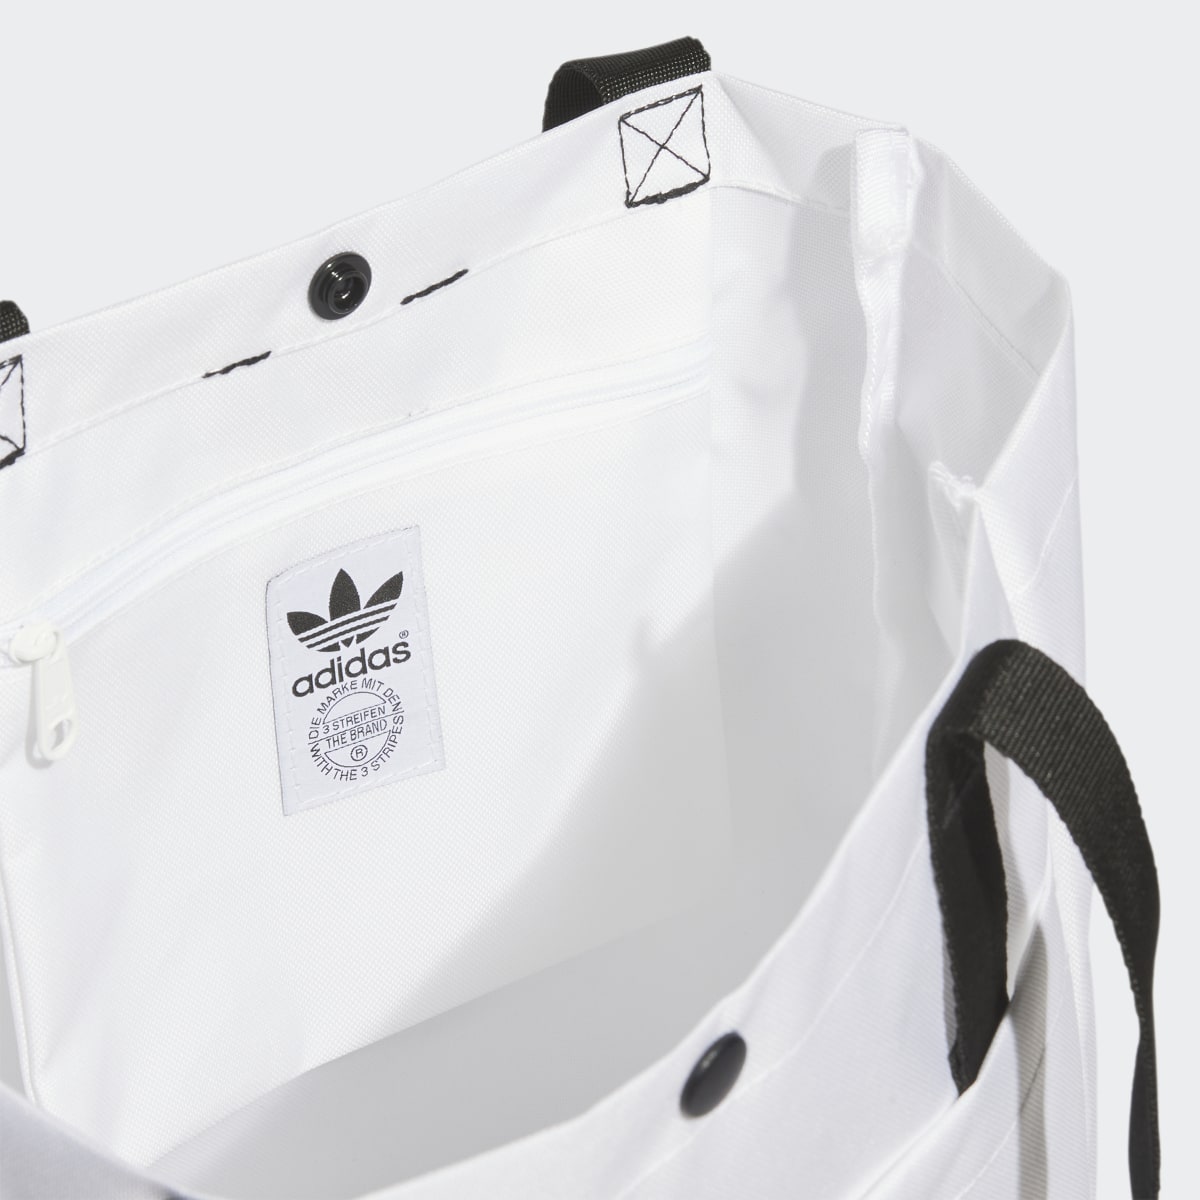 Adidas Simple Tote Bag. 6